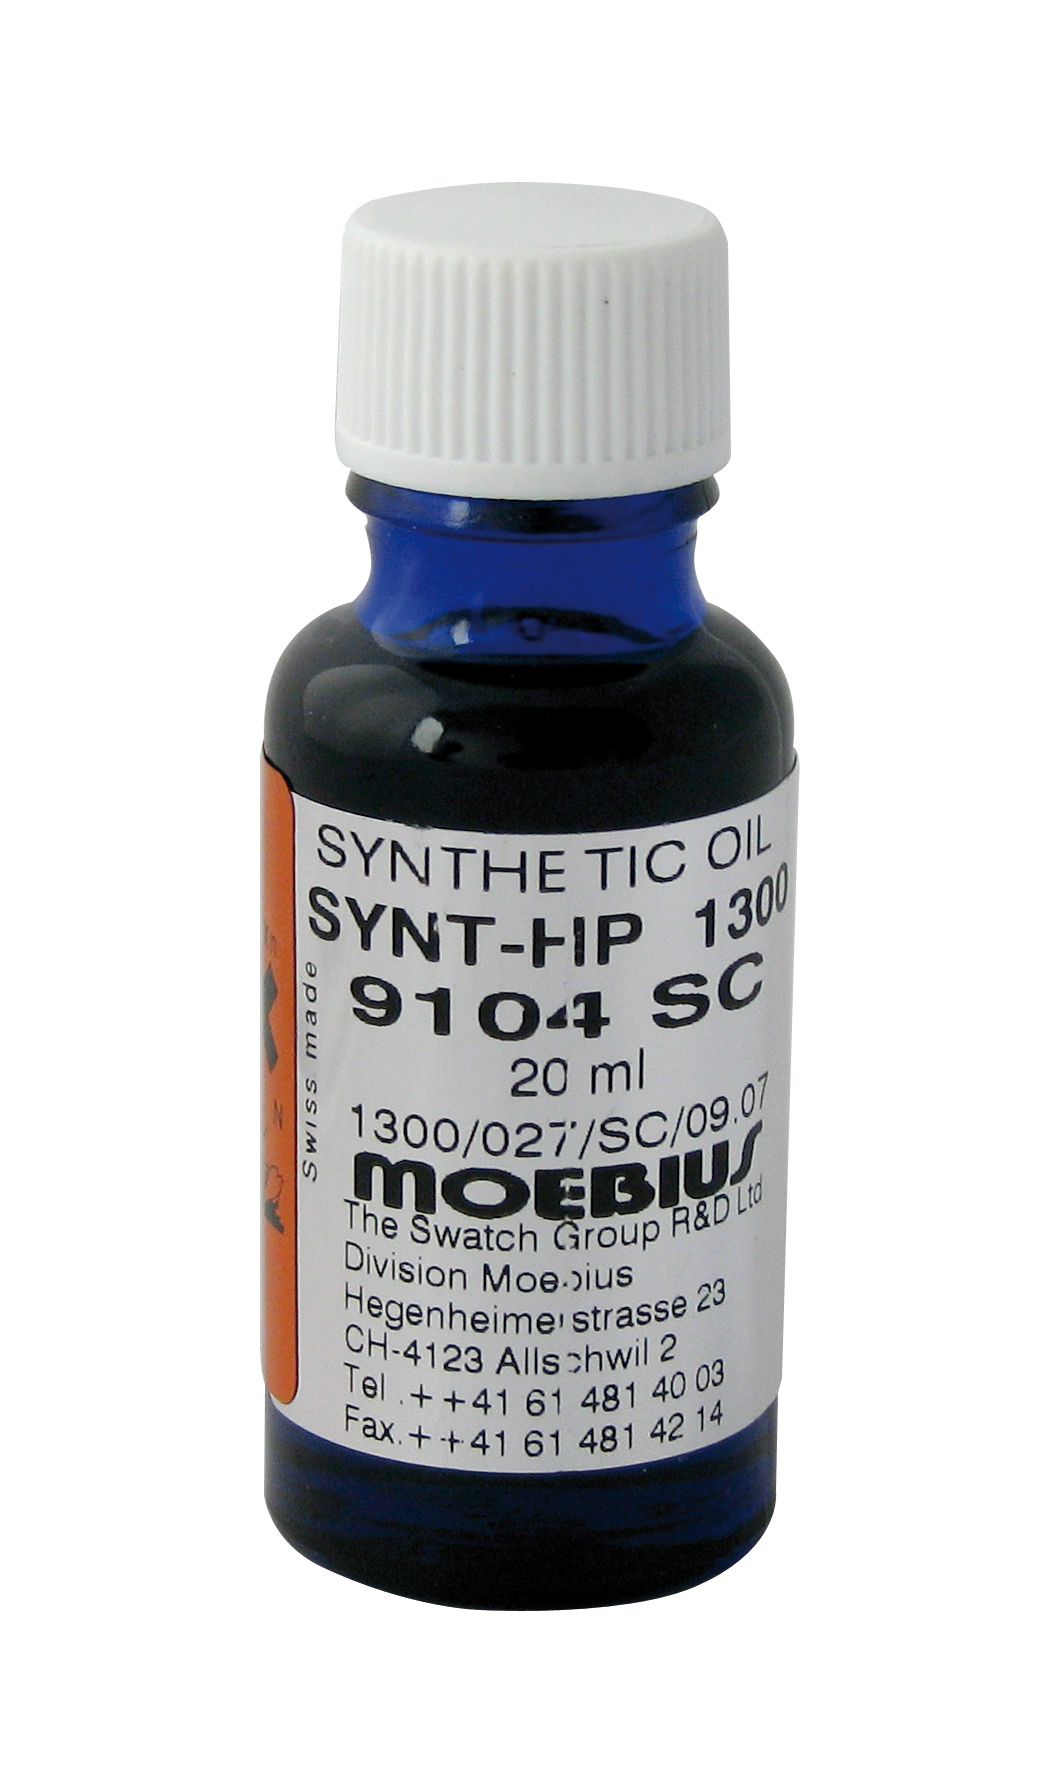 Öl HP-1300 Moebius 9104 - 20 ml